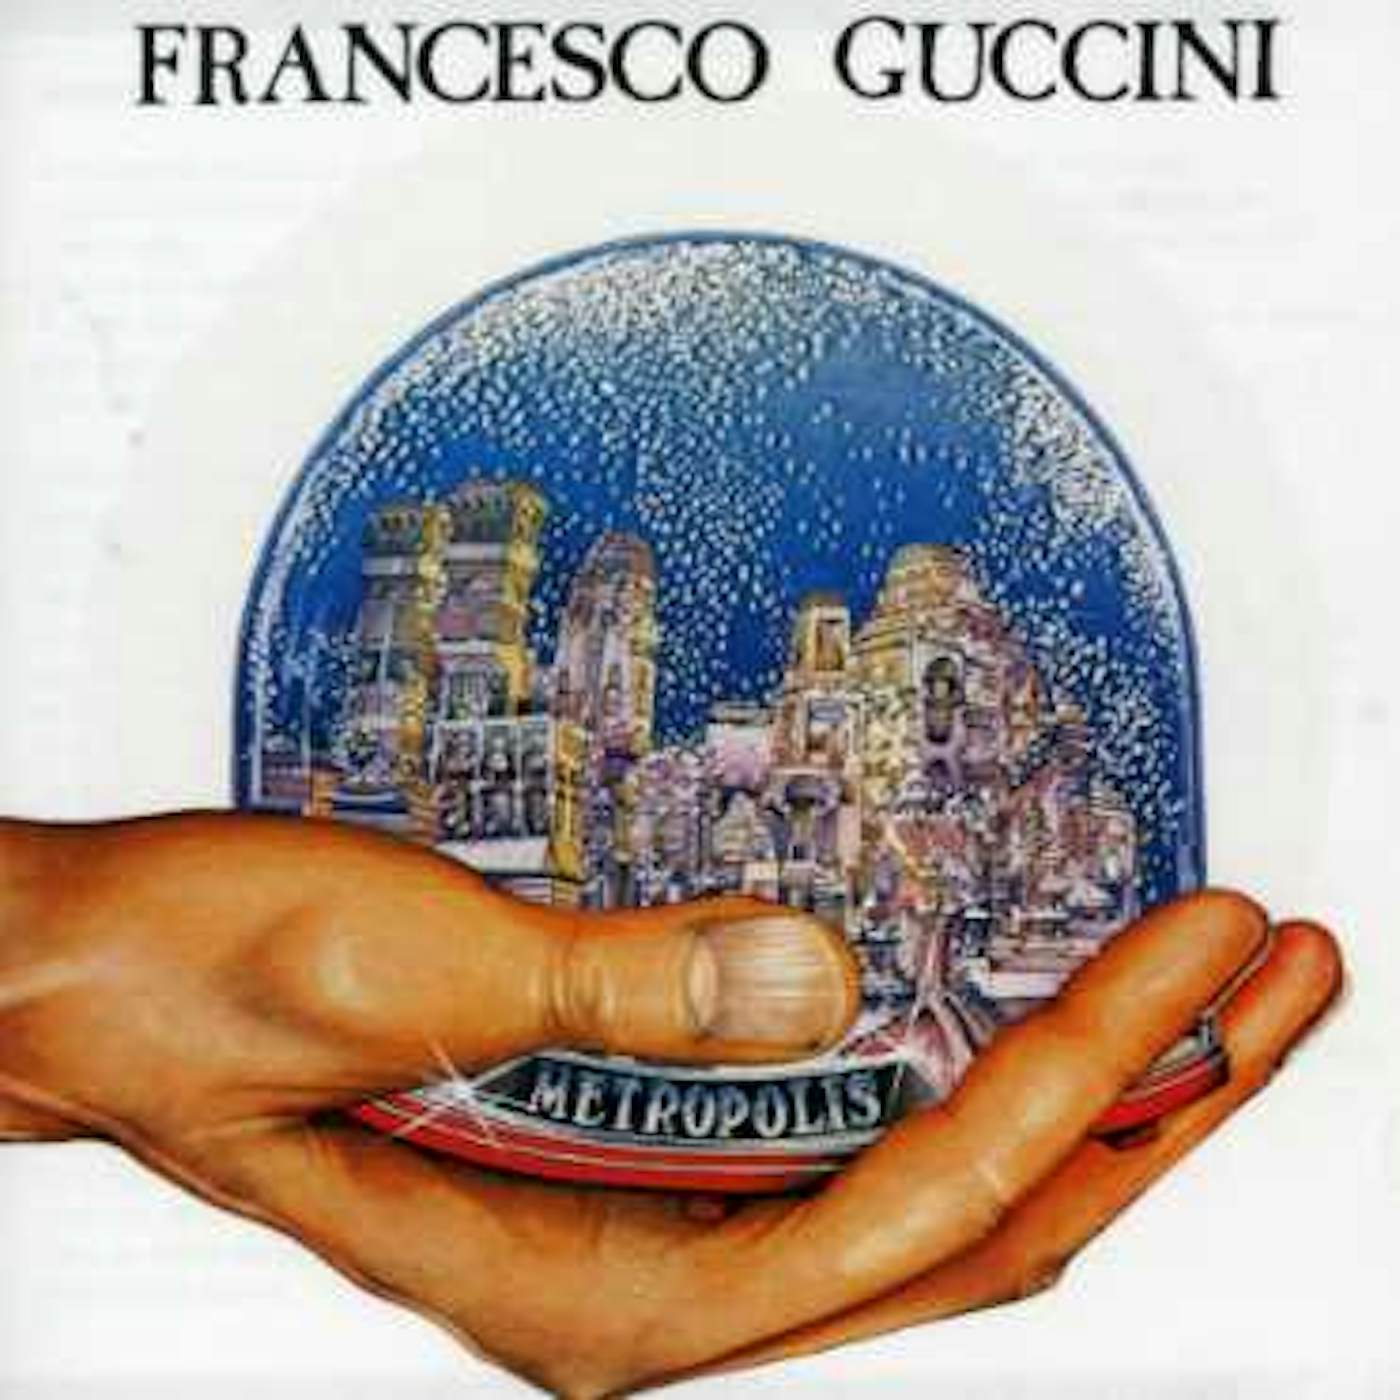 Francesco Guccini METROPOLIS CD